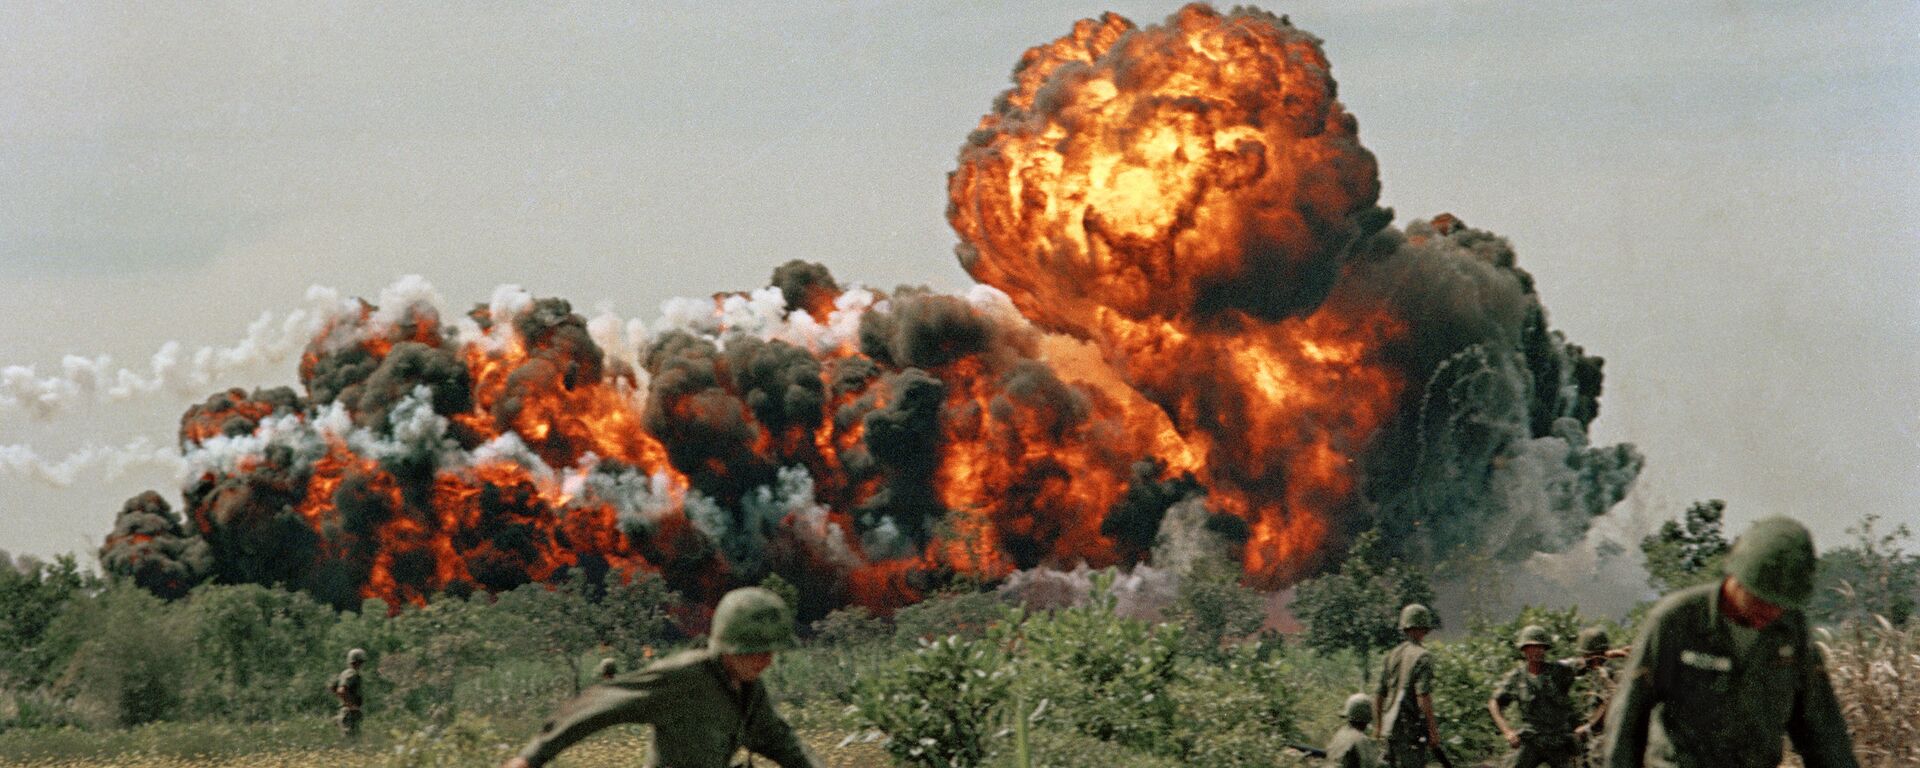 A napalm strike erupts in a fireball near U.S. troops on patrol in South Vietnam, 1966 during the Vietnam War - Sputnik International, 1920, 13.12.2019